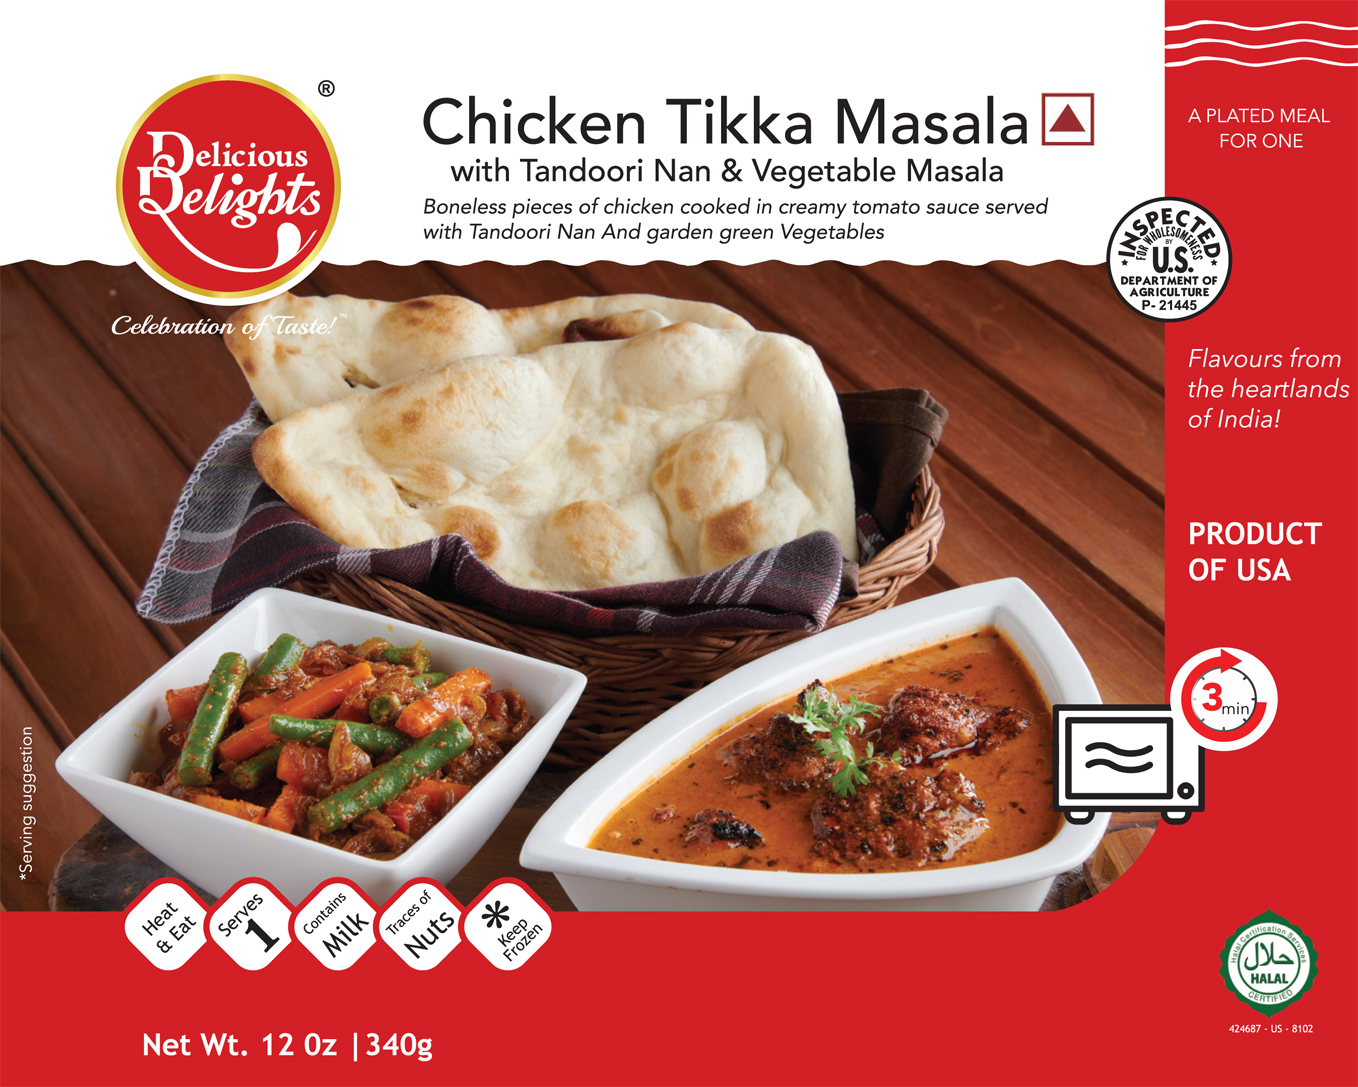 Delicious Delights Chicken Tikka Masala with Tandoori Nan and Vegetable Masala